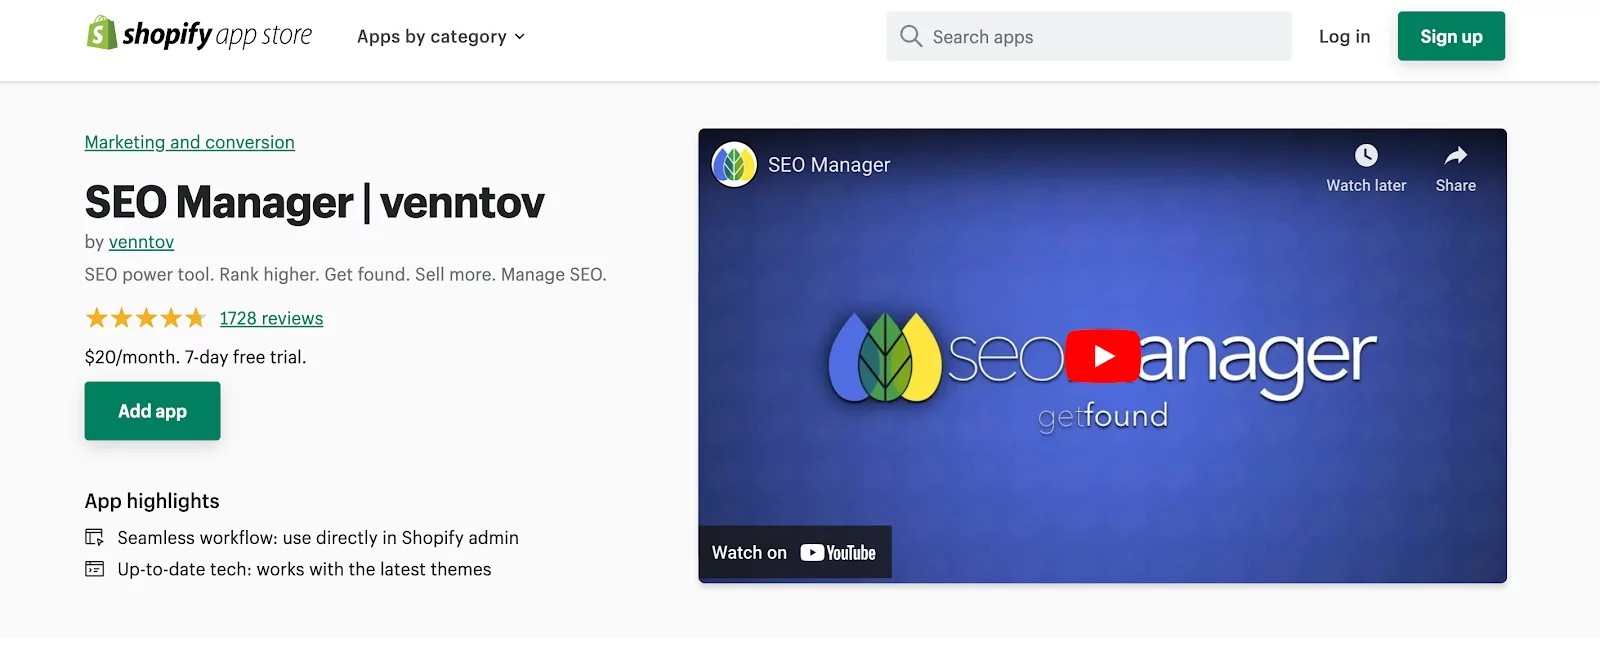 Shopify SEO Apps - SEO Manager by venntov